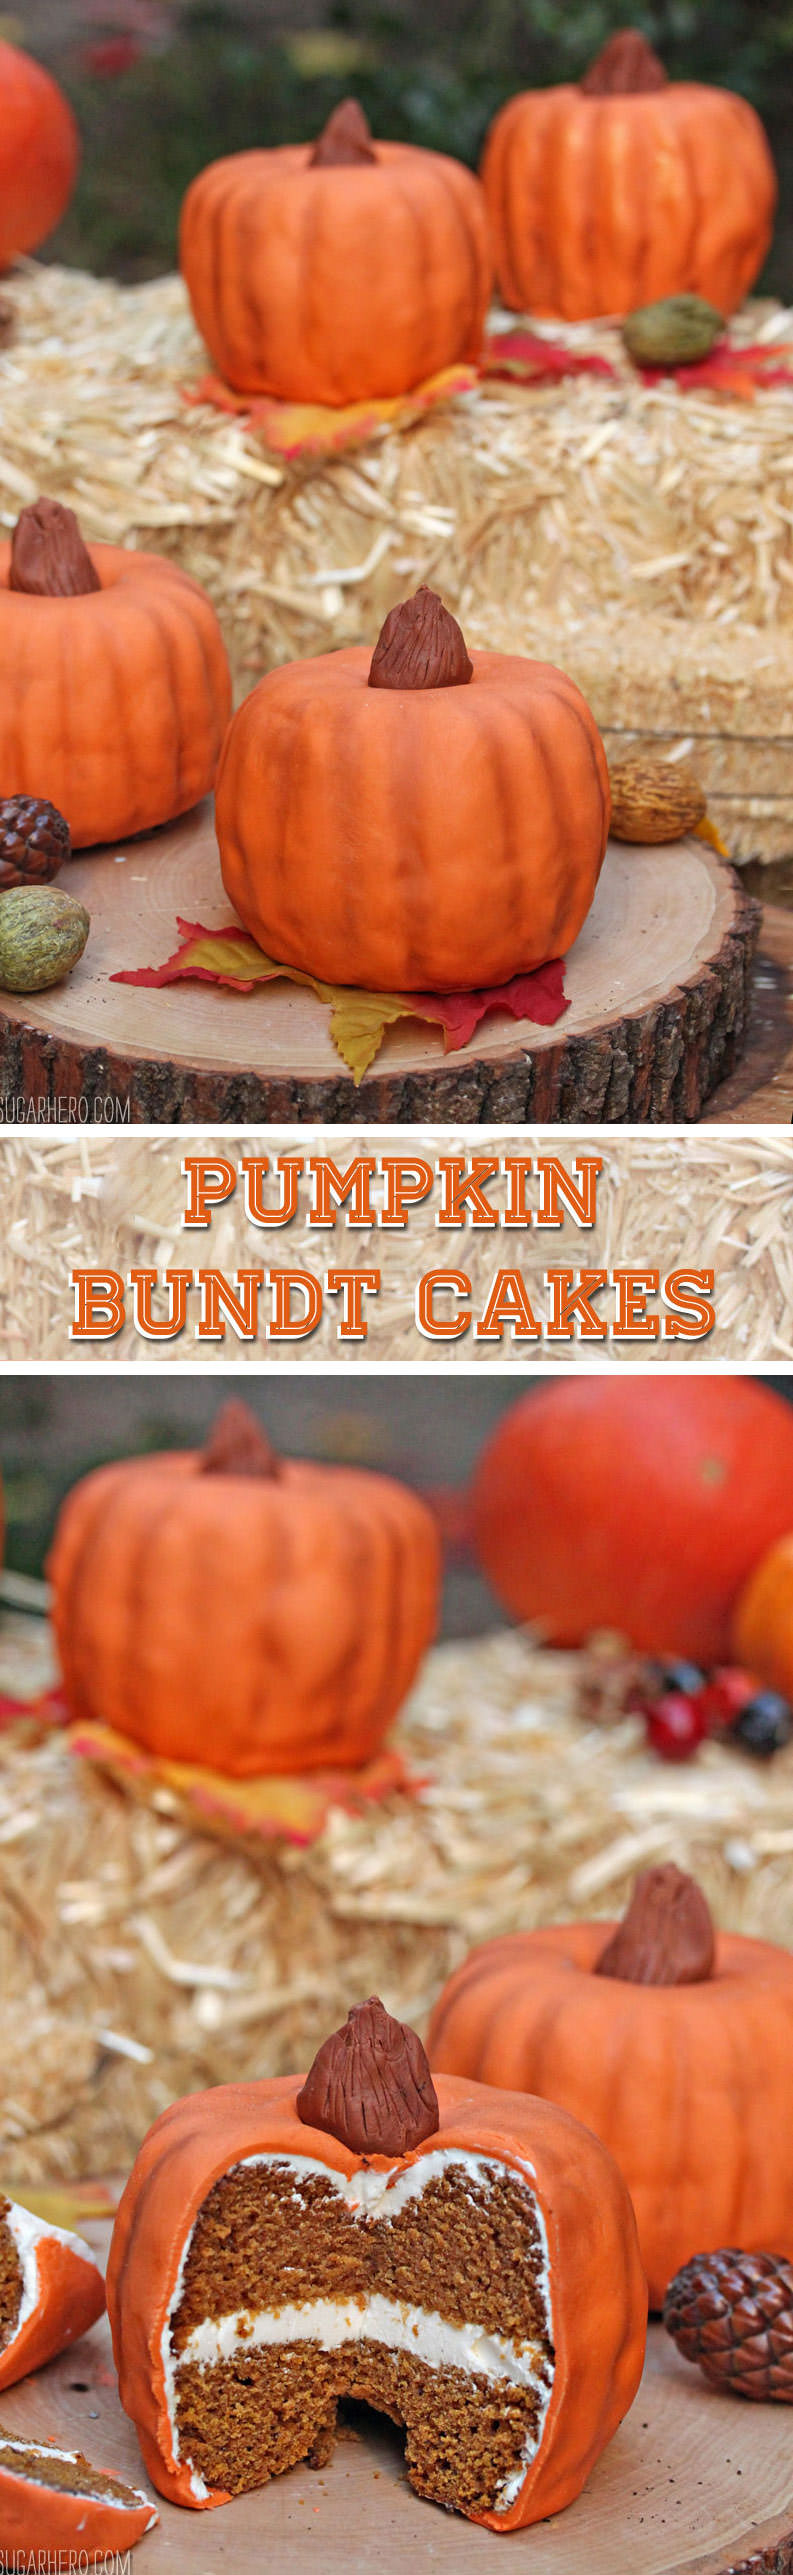 Pumpkin Bundt Cakes | From SugarHero.com